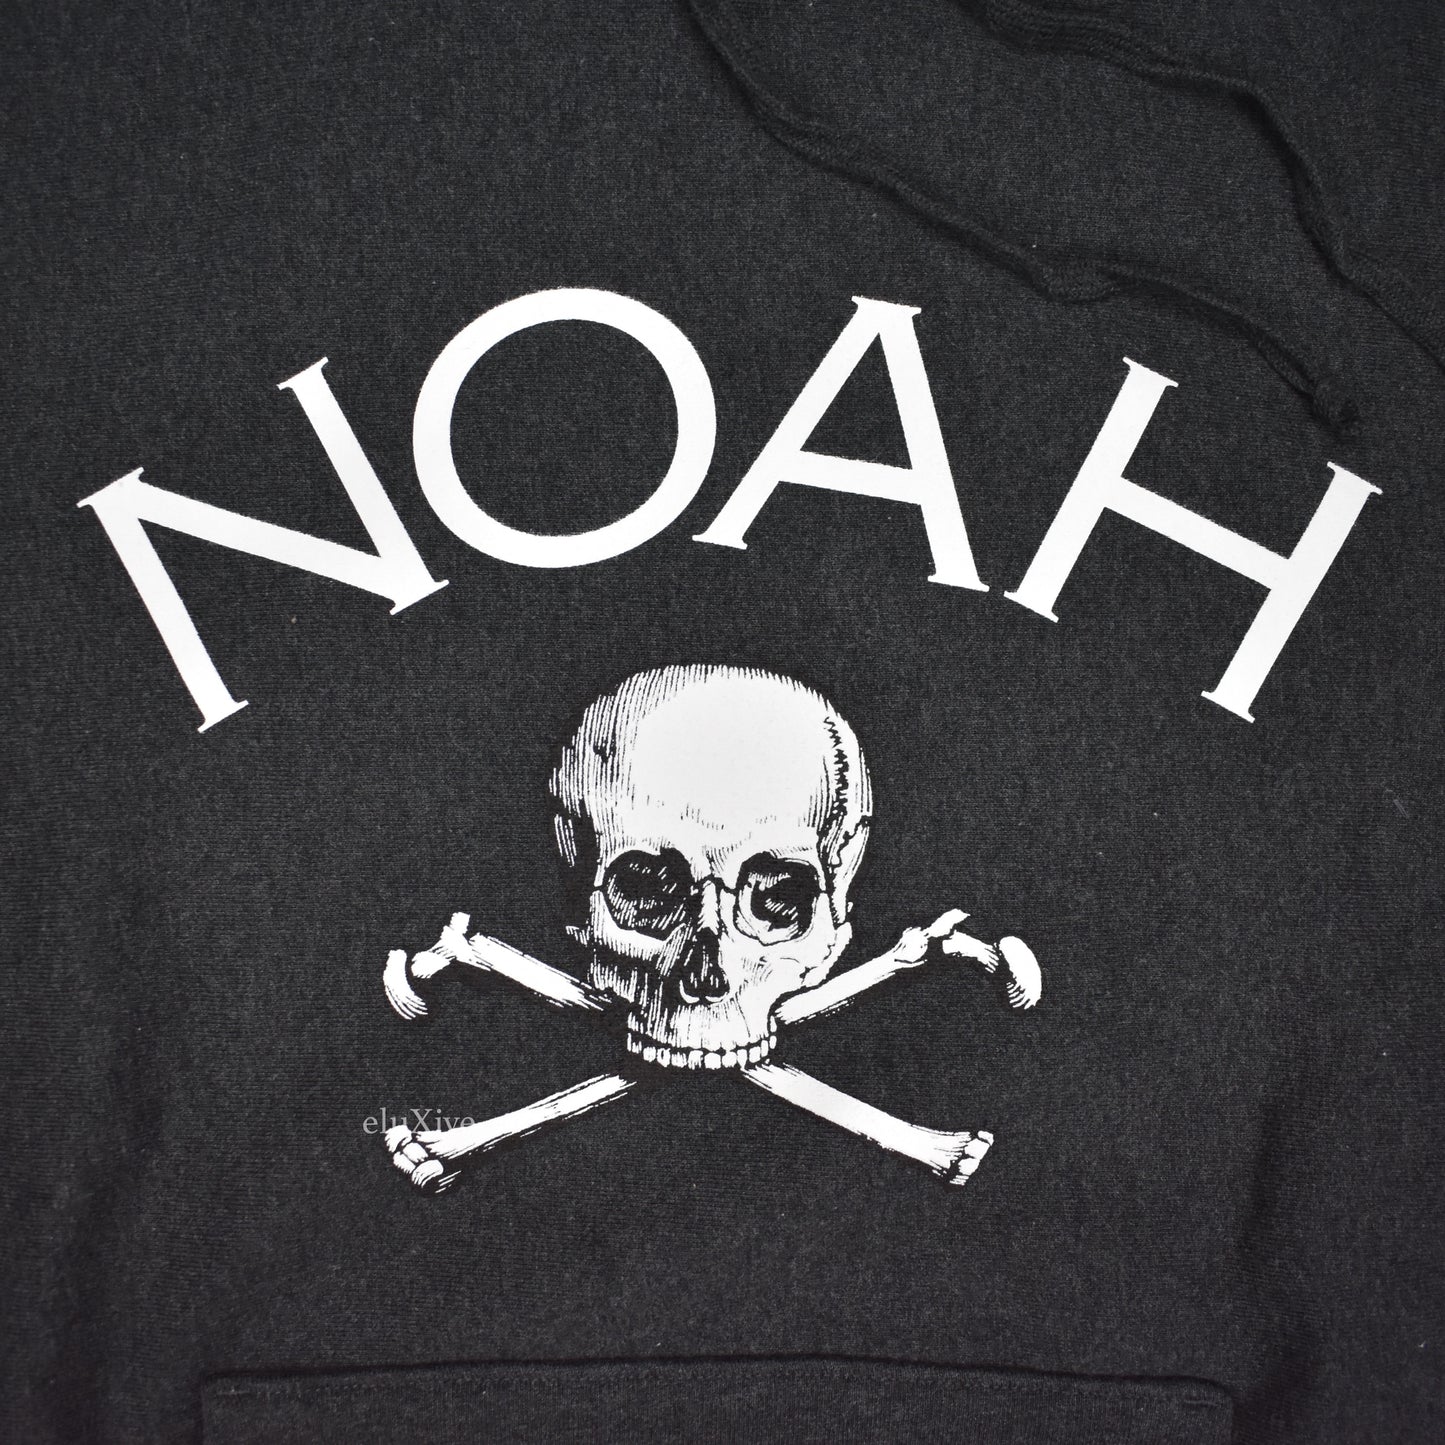 Noah - Jolly Roger Logo Hoodie (Charcoal)